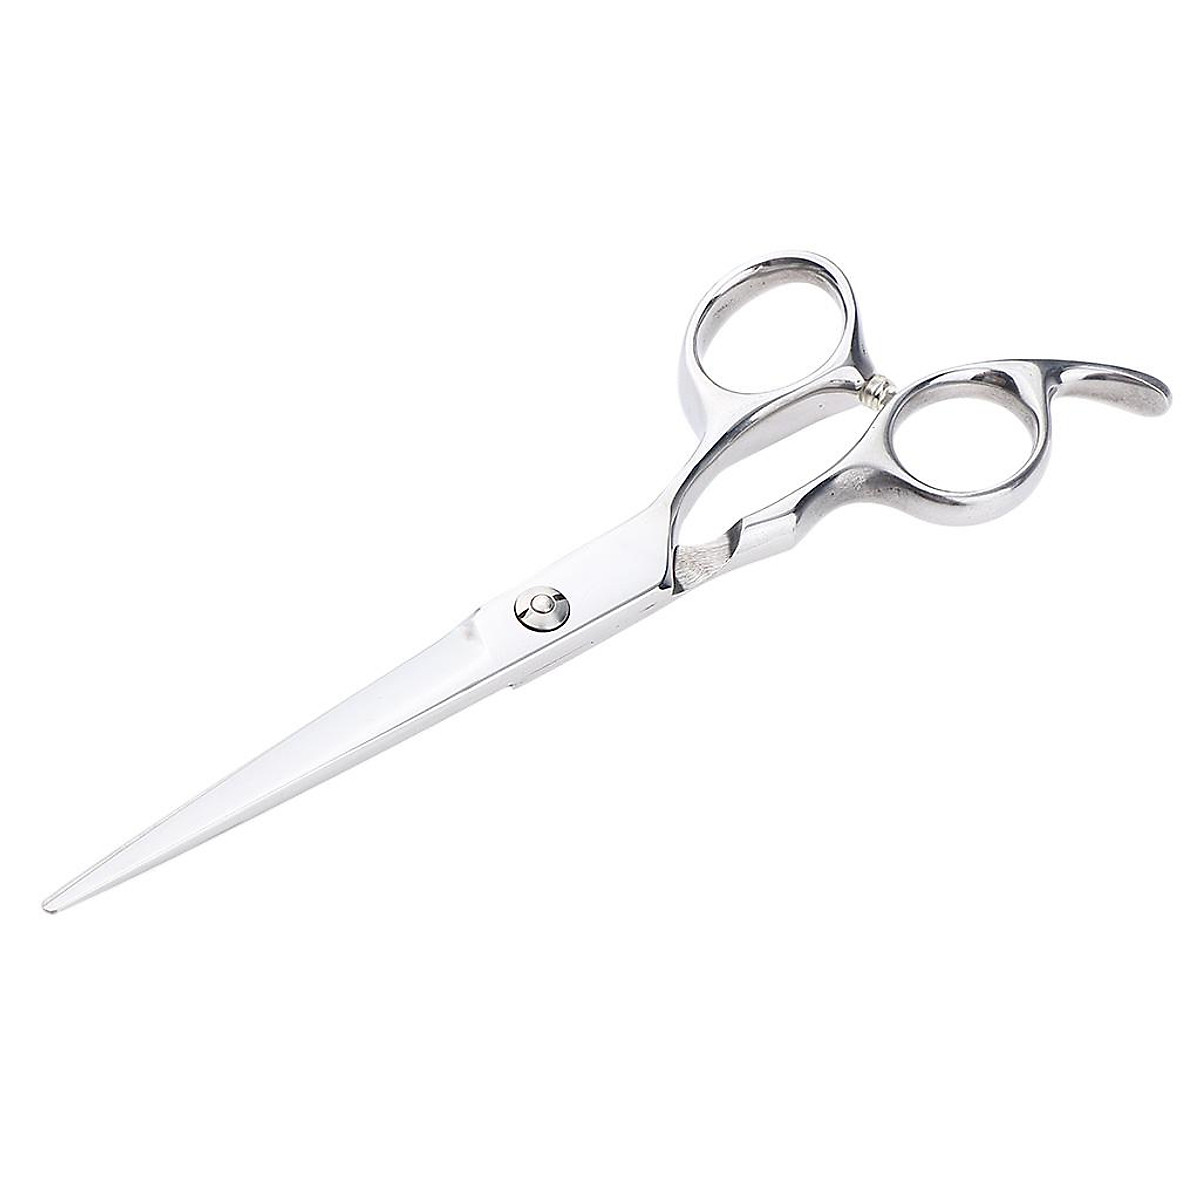 Professional Salon Hair Cut Scissors Thinning Shears Hairdressing Tool Sets